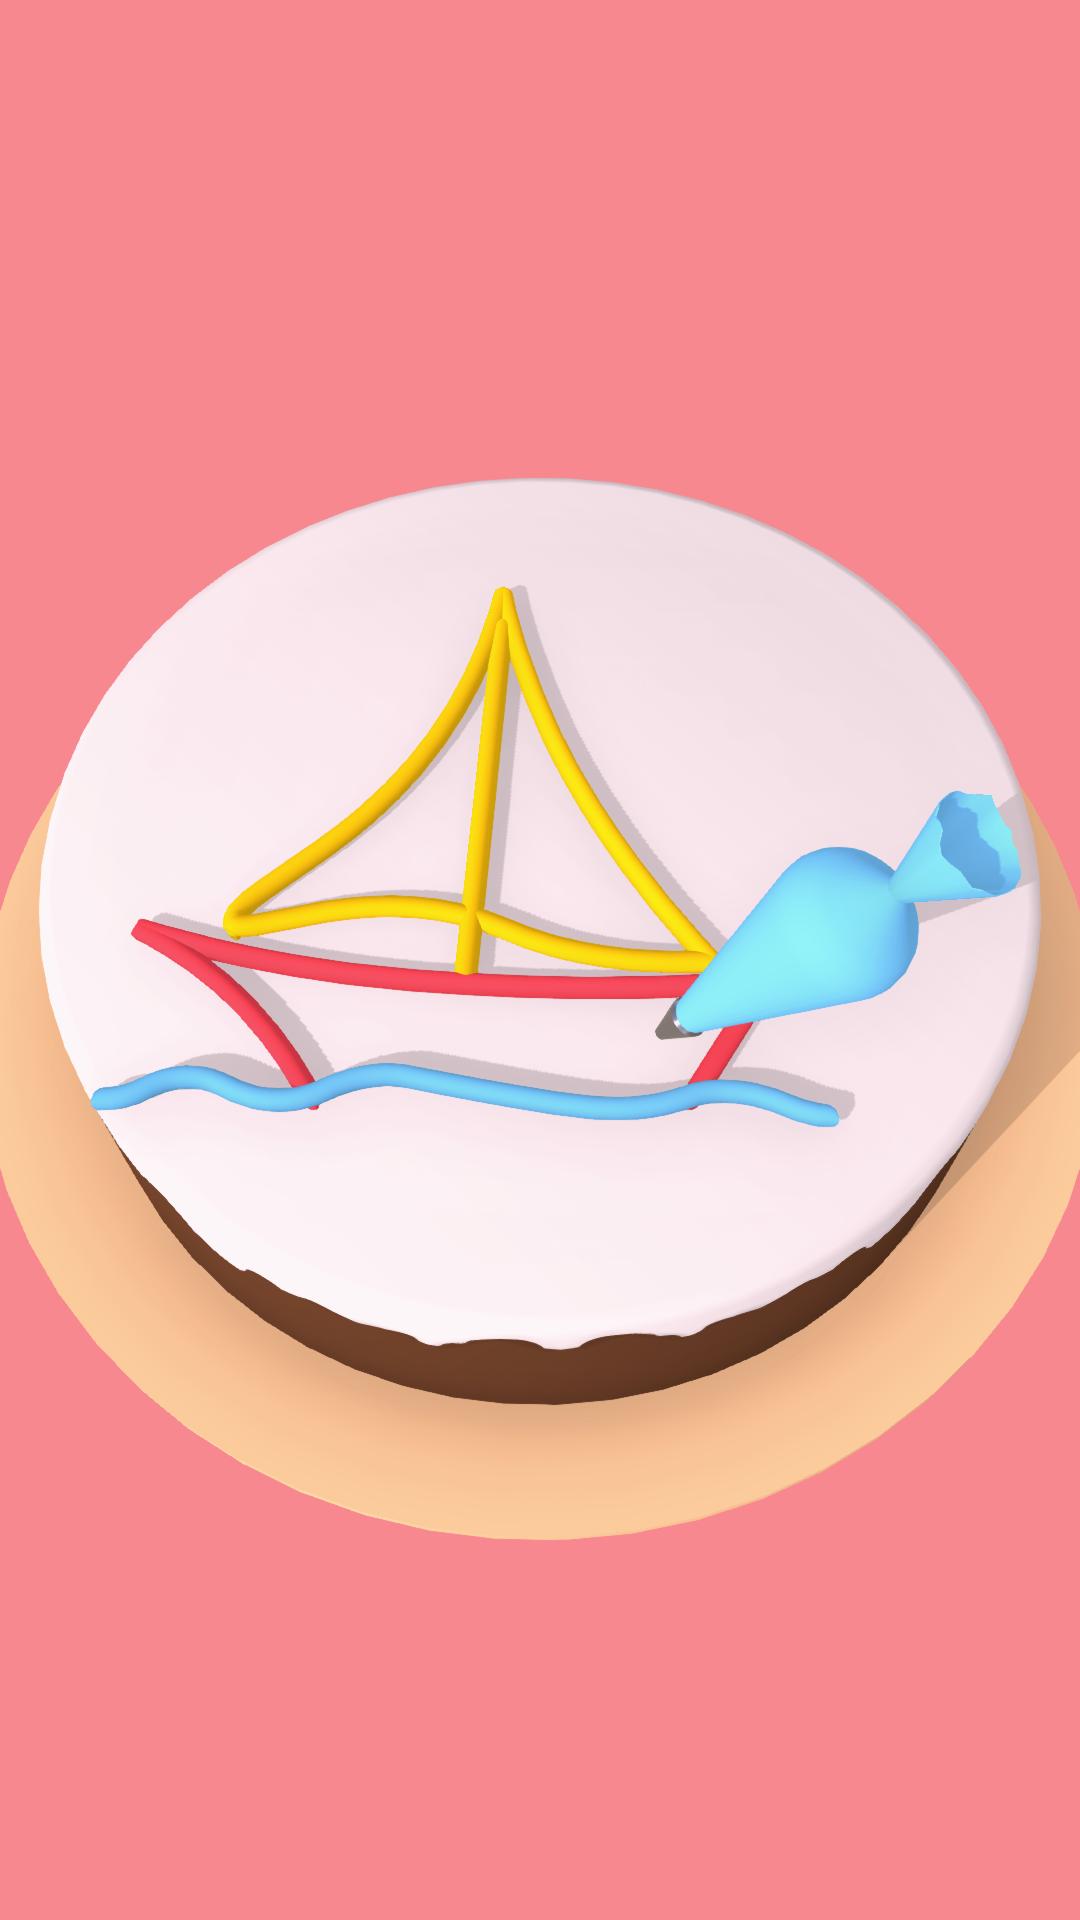 Cake Decorate 1.3.3 Screenshot 5